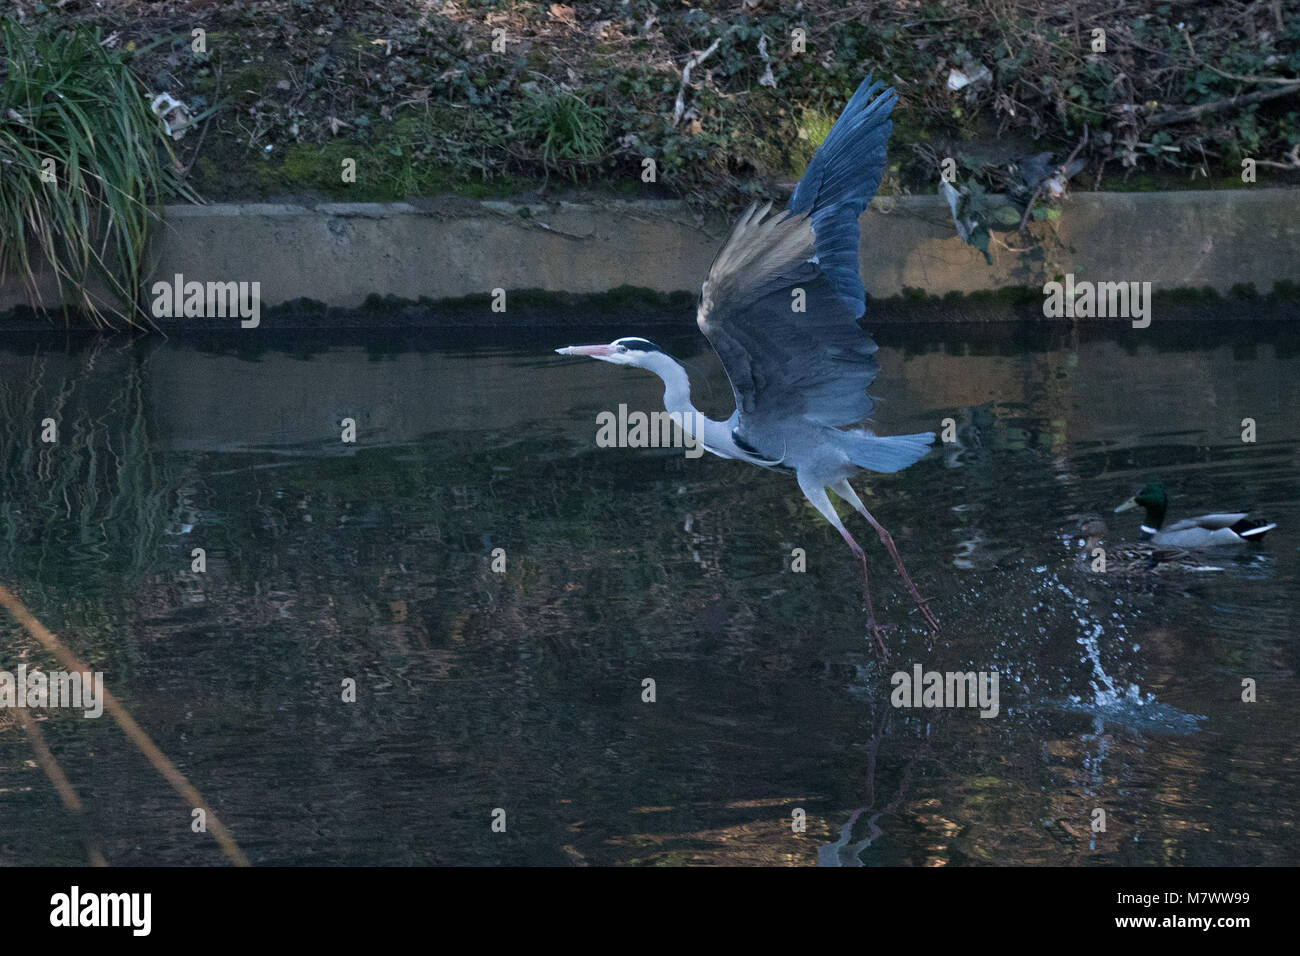 Ein Kran (Vogel) nimmt Flug auf dem Fluss Brent in West London. Foto Datum: Sonntag, 25 Februar, 2018. Foto: Alamy Stockfoto